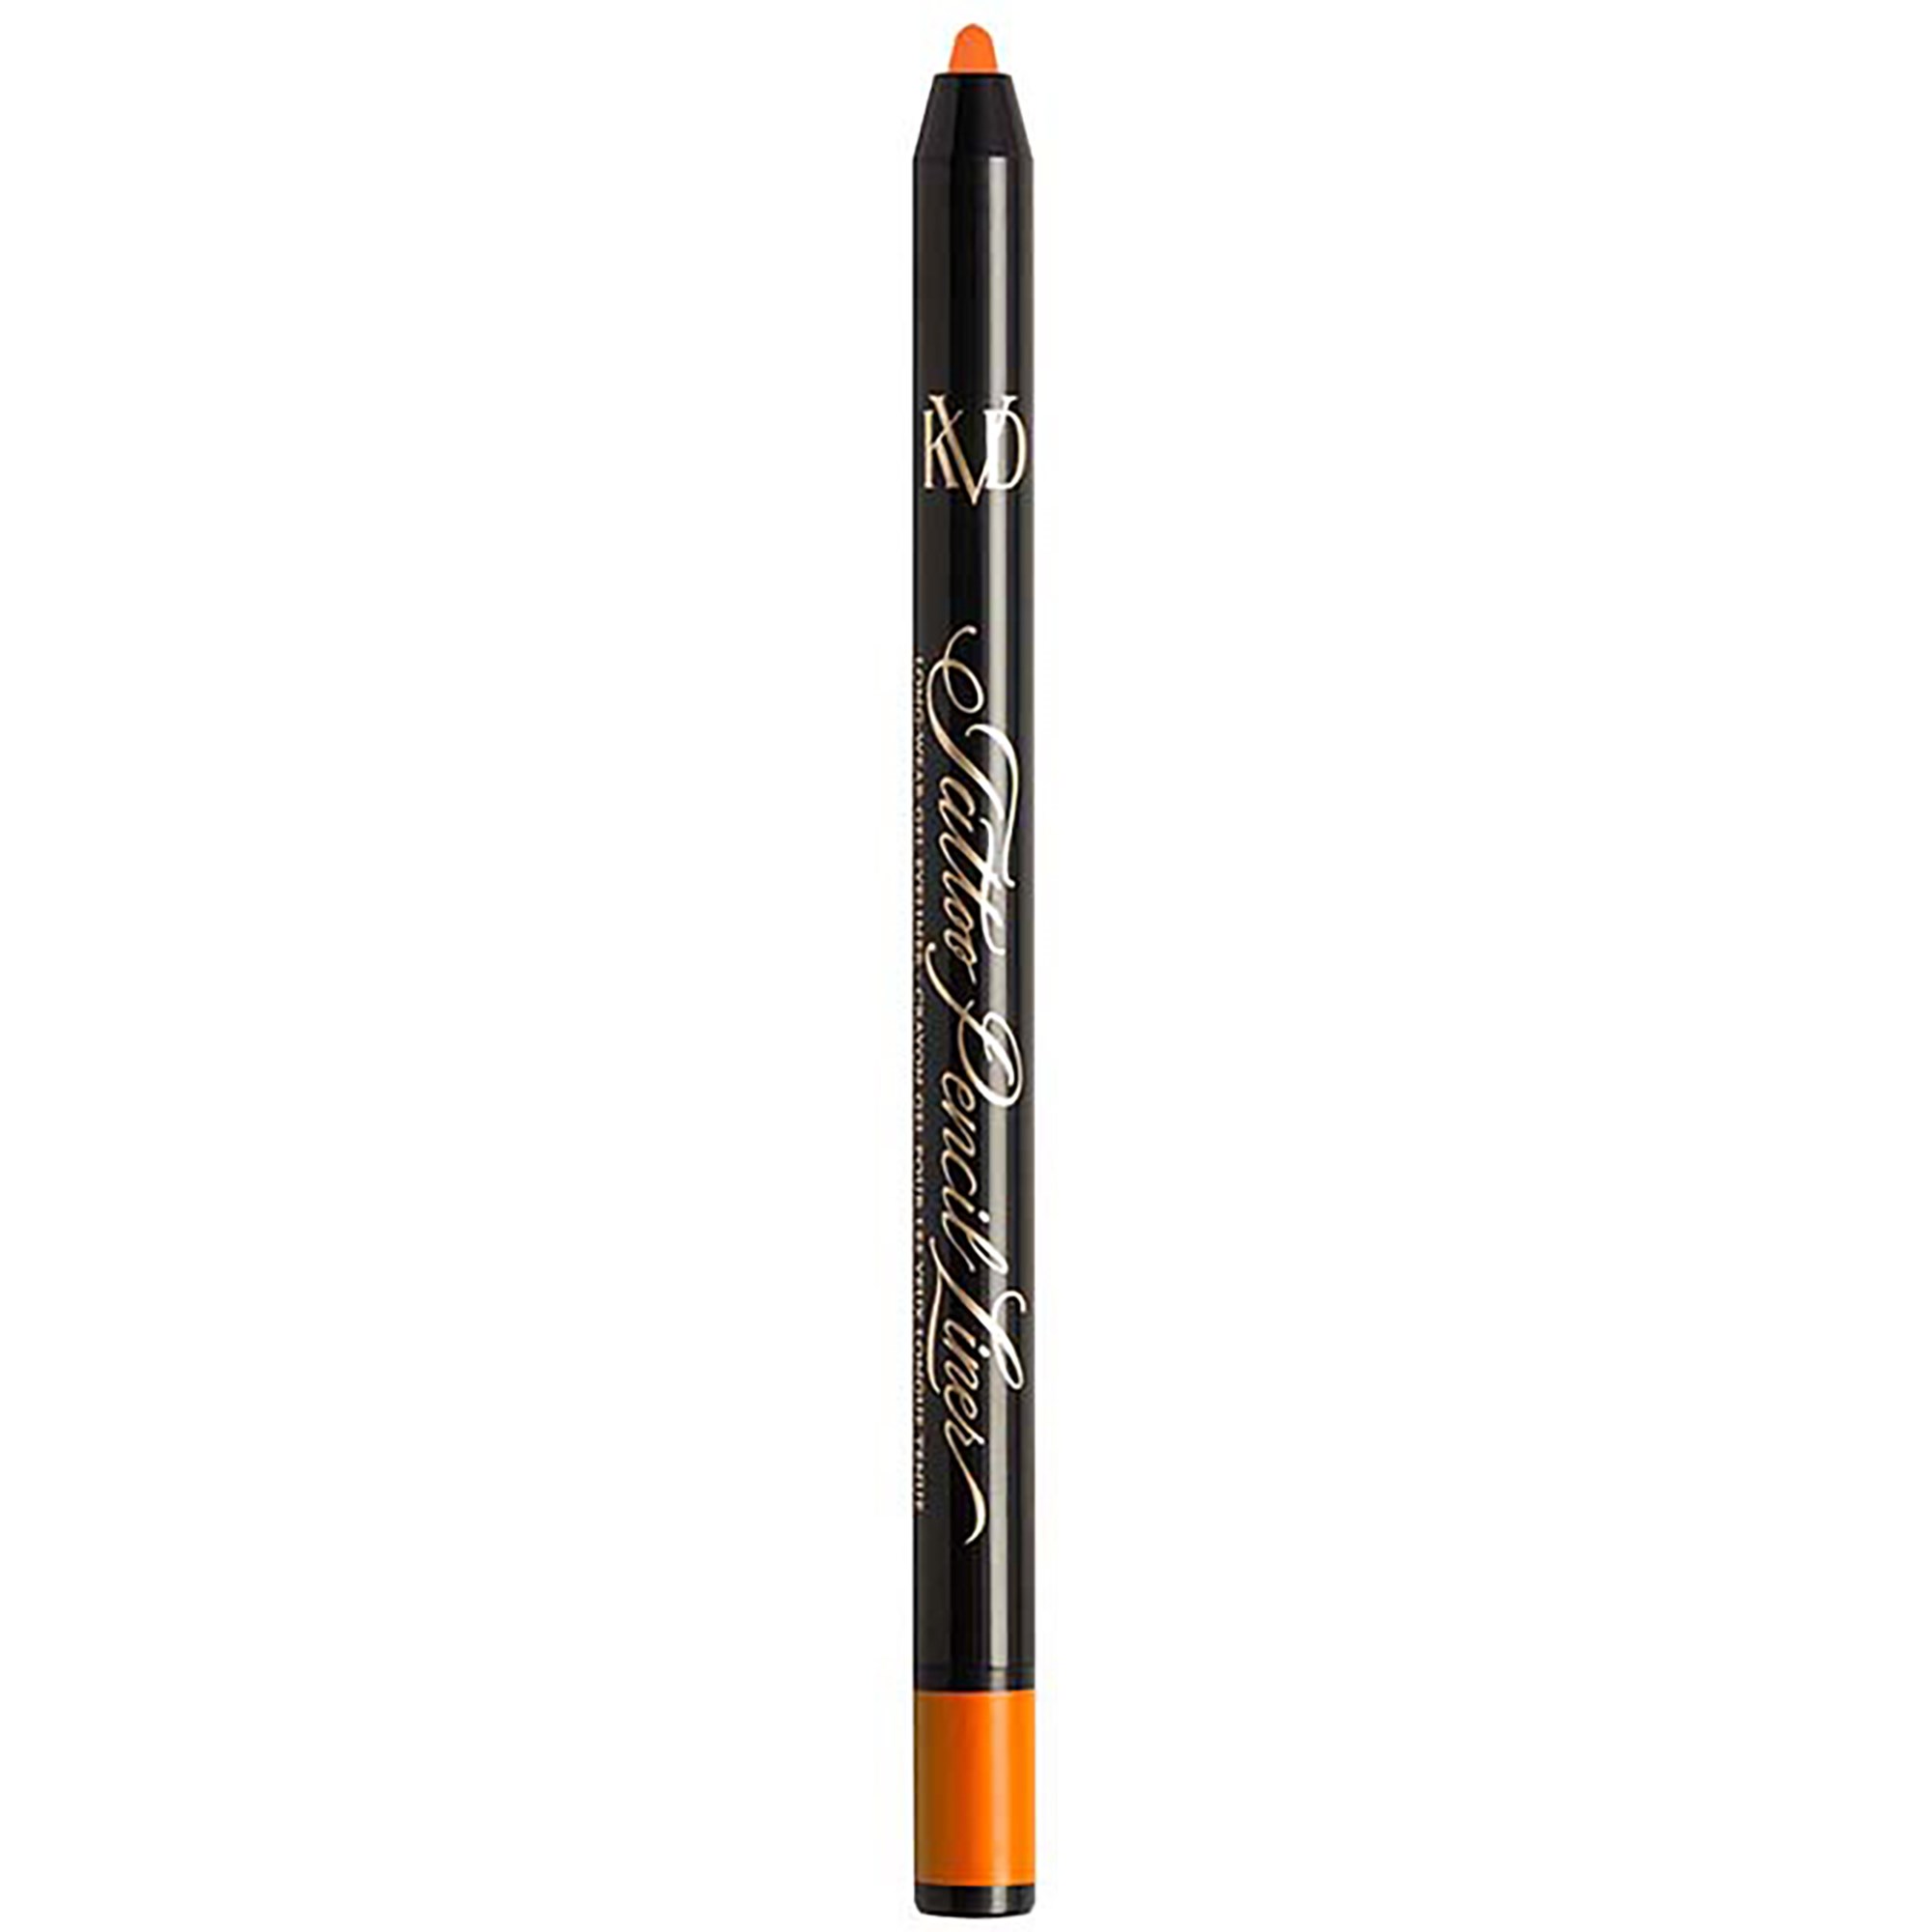 KVD Beauty Tatoo Pencil Liner Uranium Orange